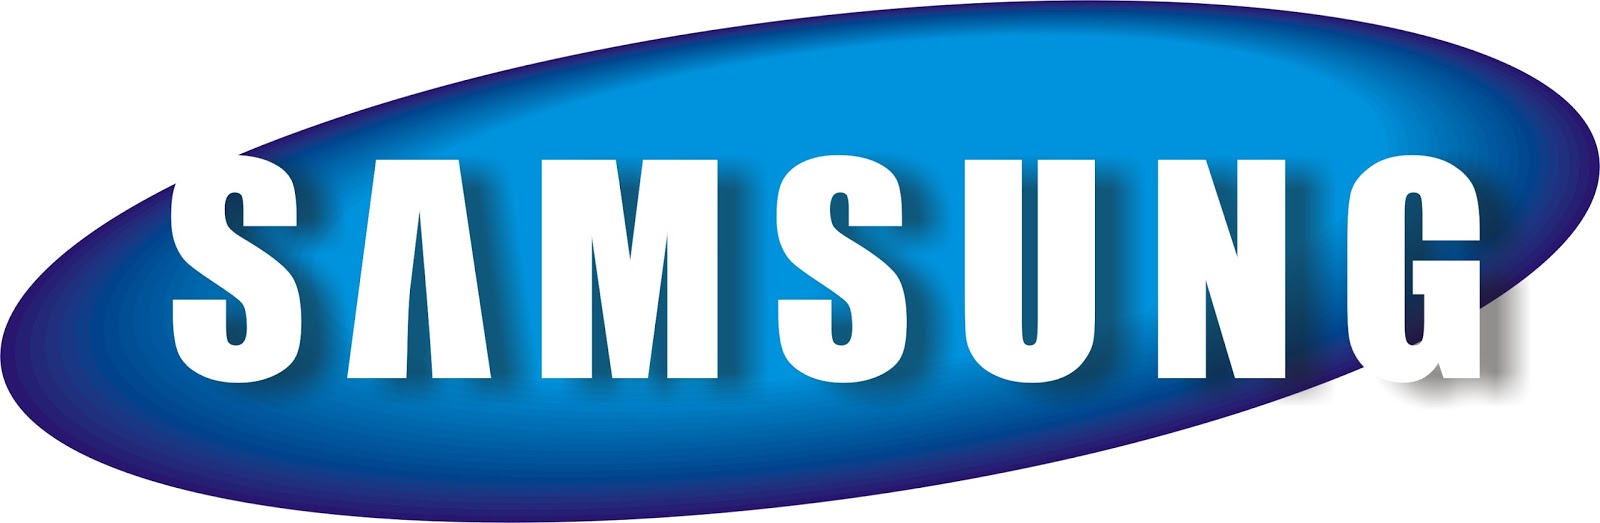 Samsung Hd Png Hdpng.com 1600 - Samsung, Transparent background PNG HD thumbnail